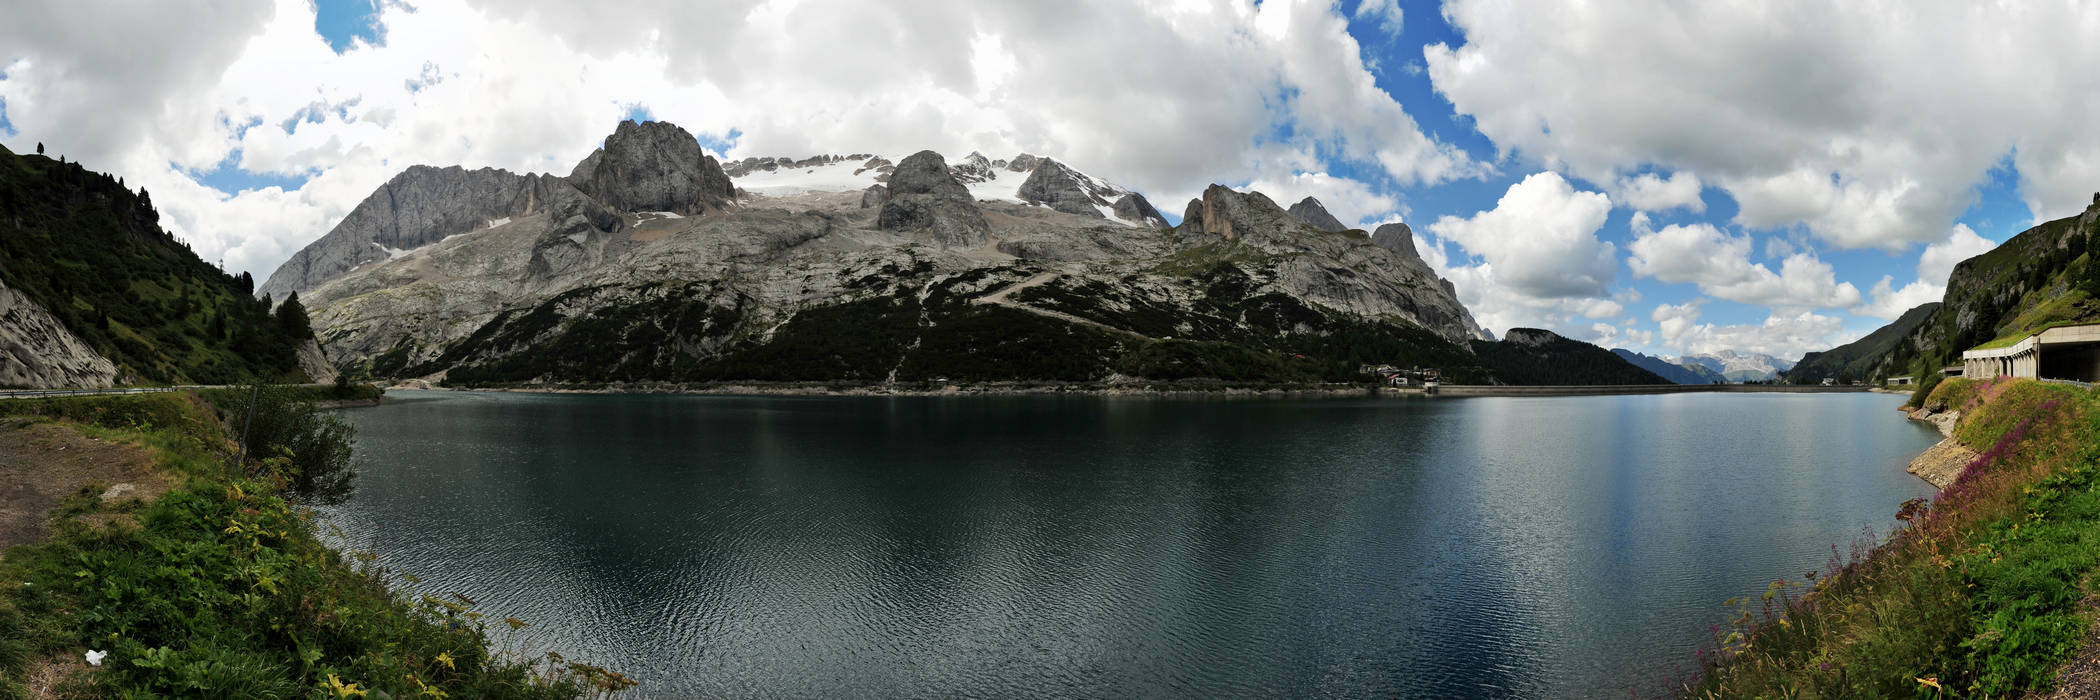 lago Fedaia, ghiacciaio della Marmolada